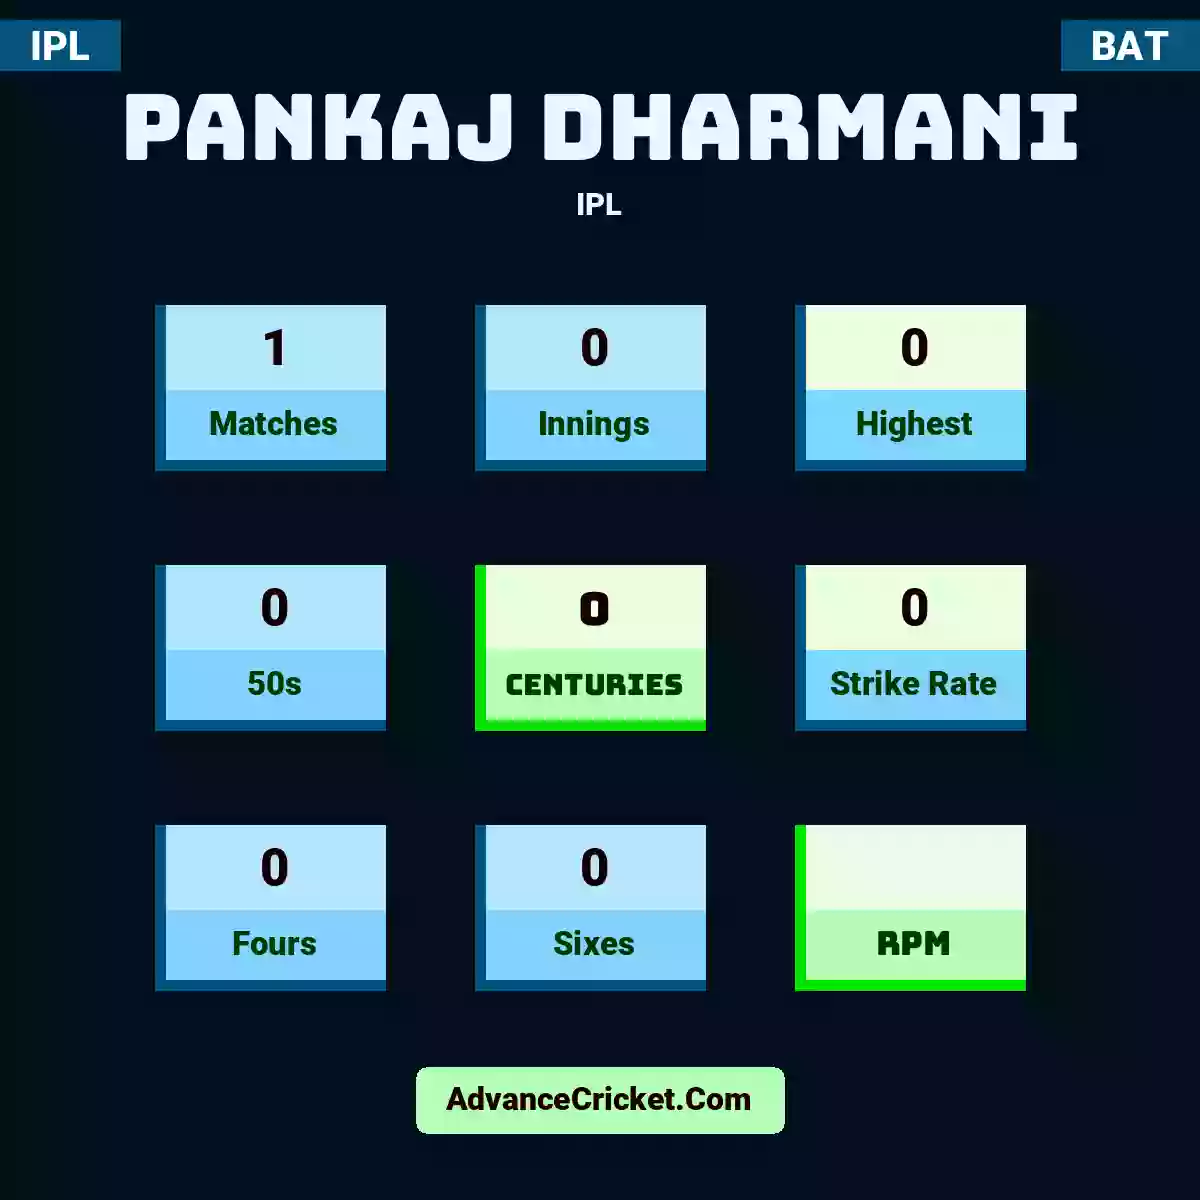 Pankaj Dharmani IPL , Pankaj Dharmani played 1 matches, scored 0 runs as highest, 0 half-centuries, and 0 centuries, with a strike rate of 0. P.Dharmani hit 0 fours and 0 sixes.